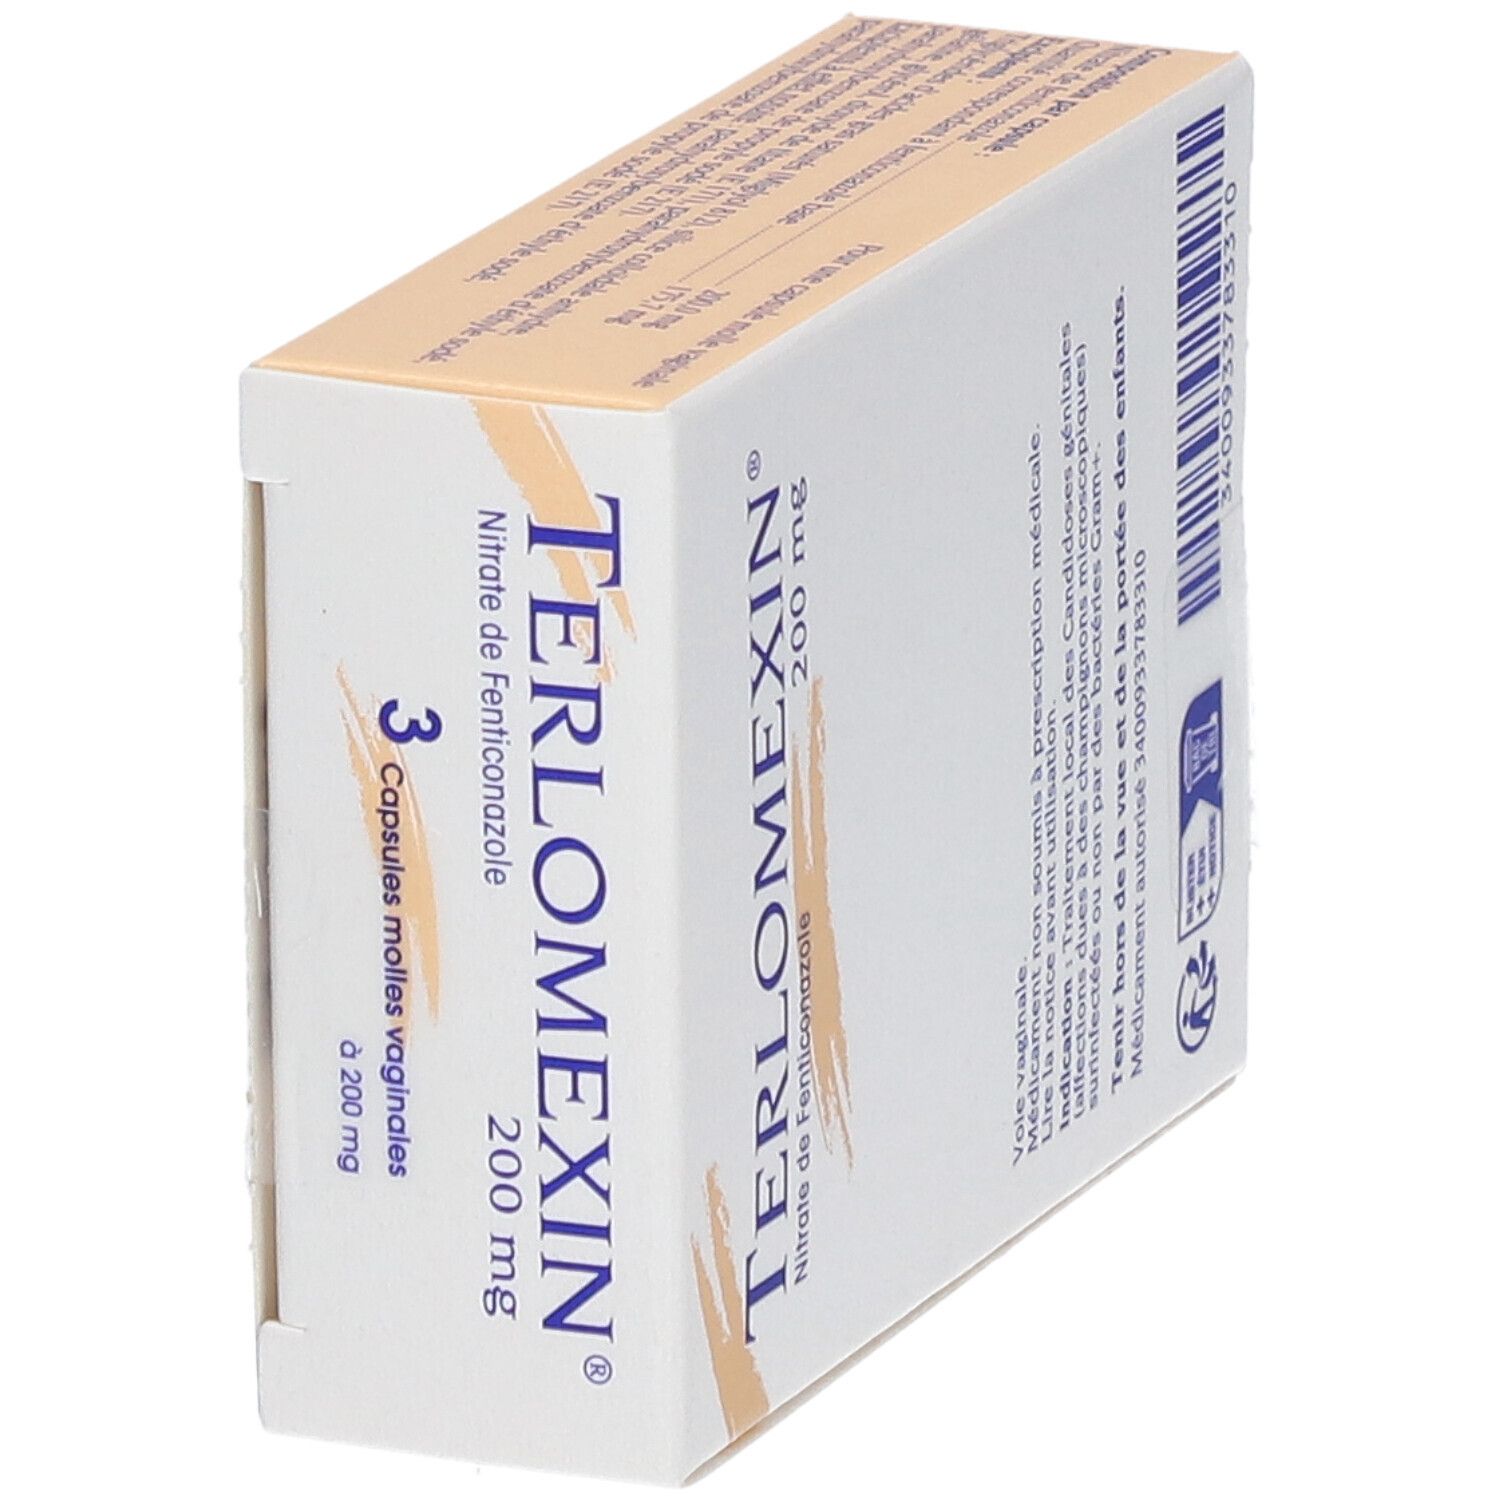 Terlomexin® 200